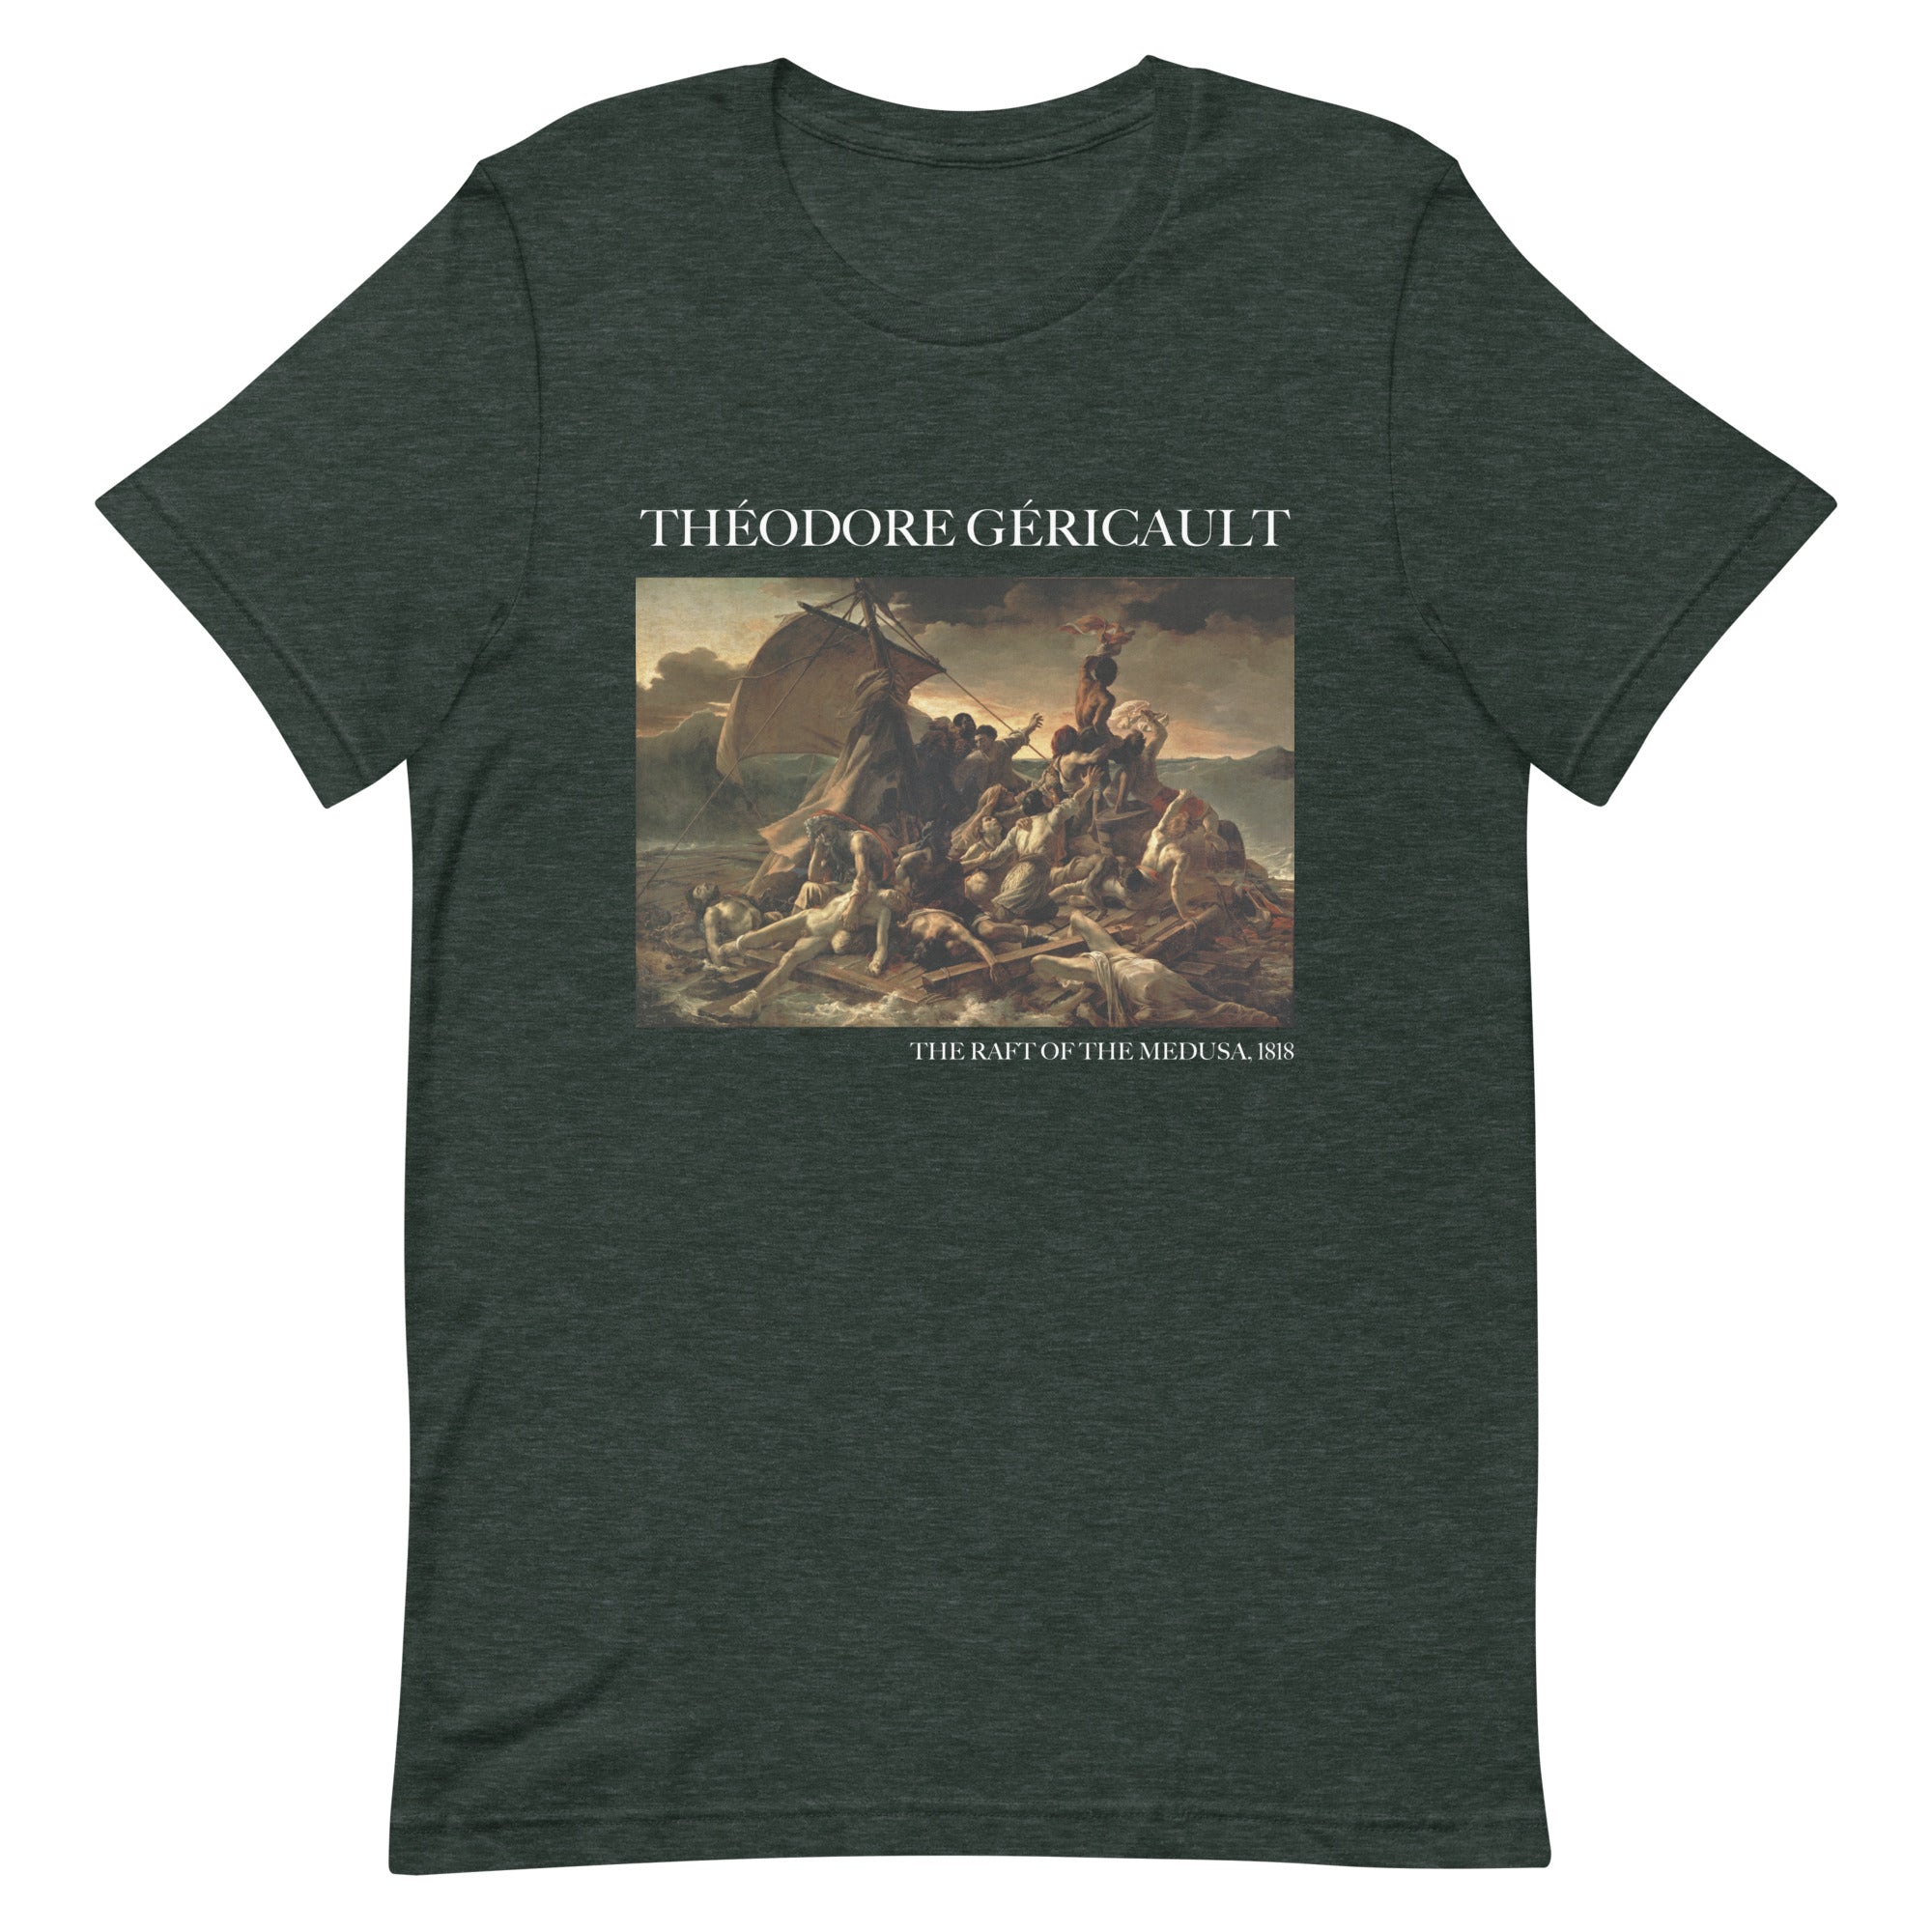 Théodore Géricault 'The Raft of the Medusa' Famous Painting T-Shirt | Unisex Classic Art Tee